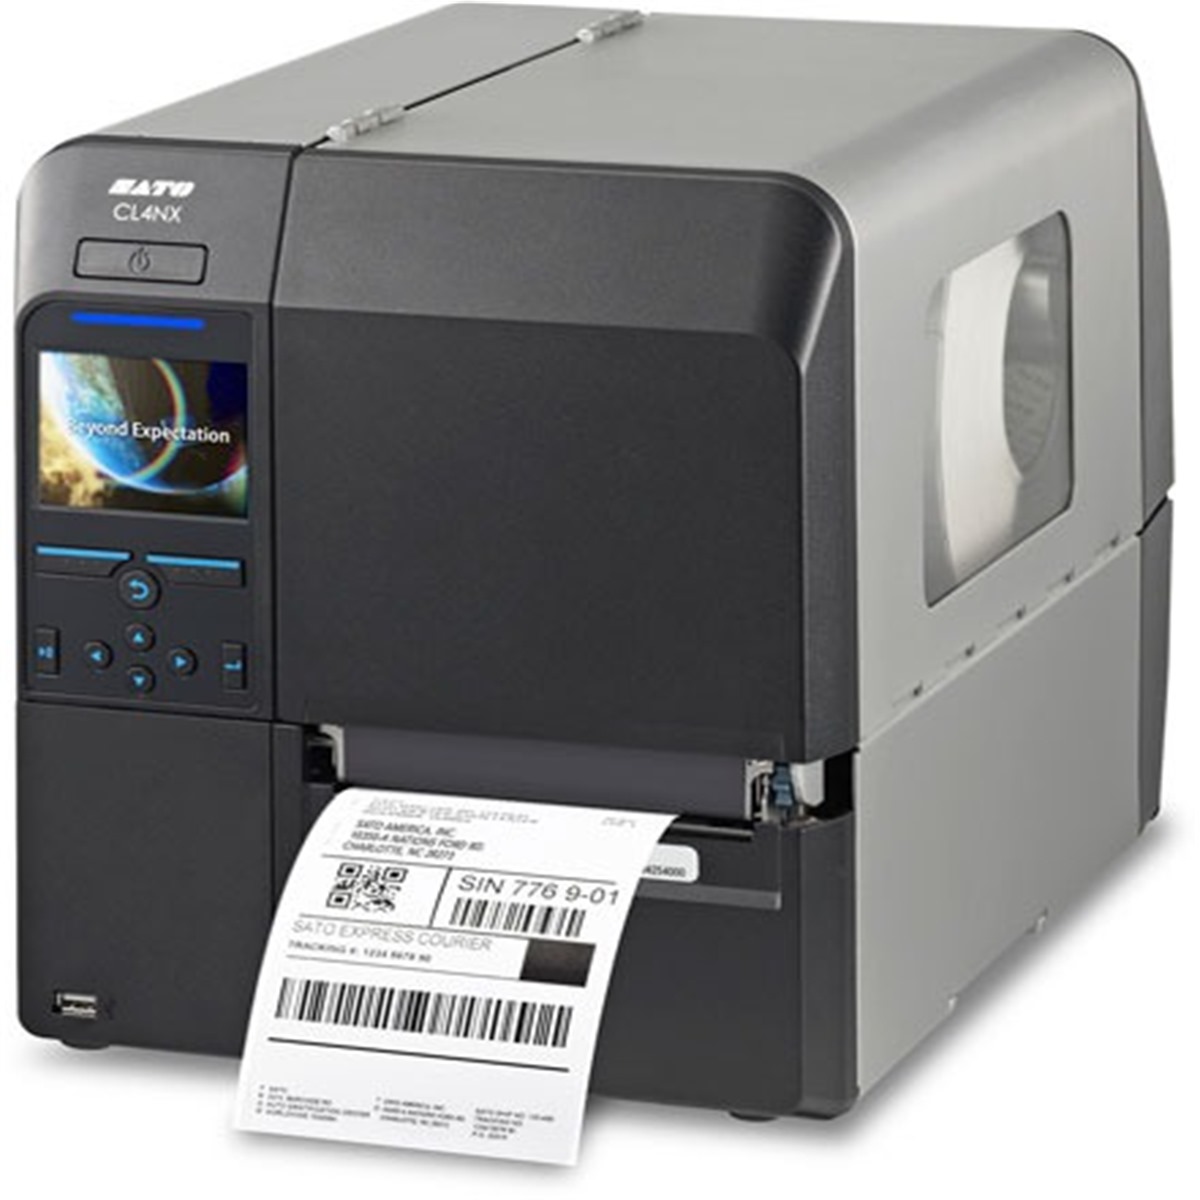 SATO CL4NX CL6NX label printer